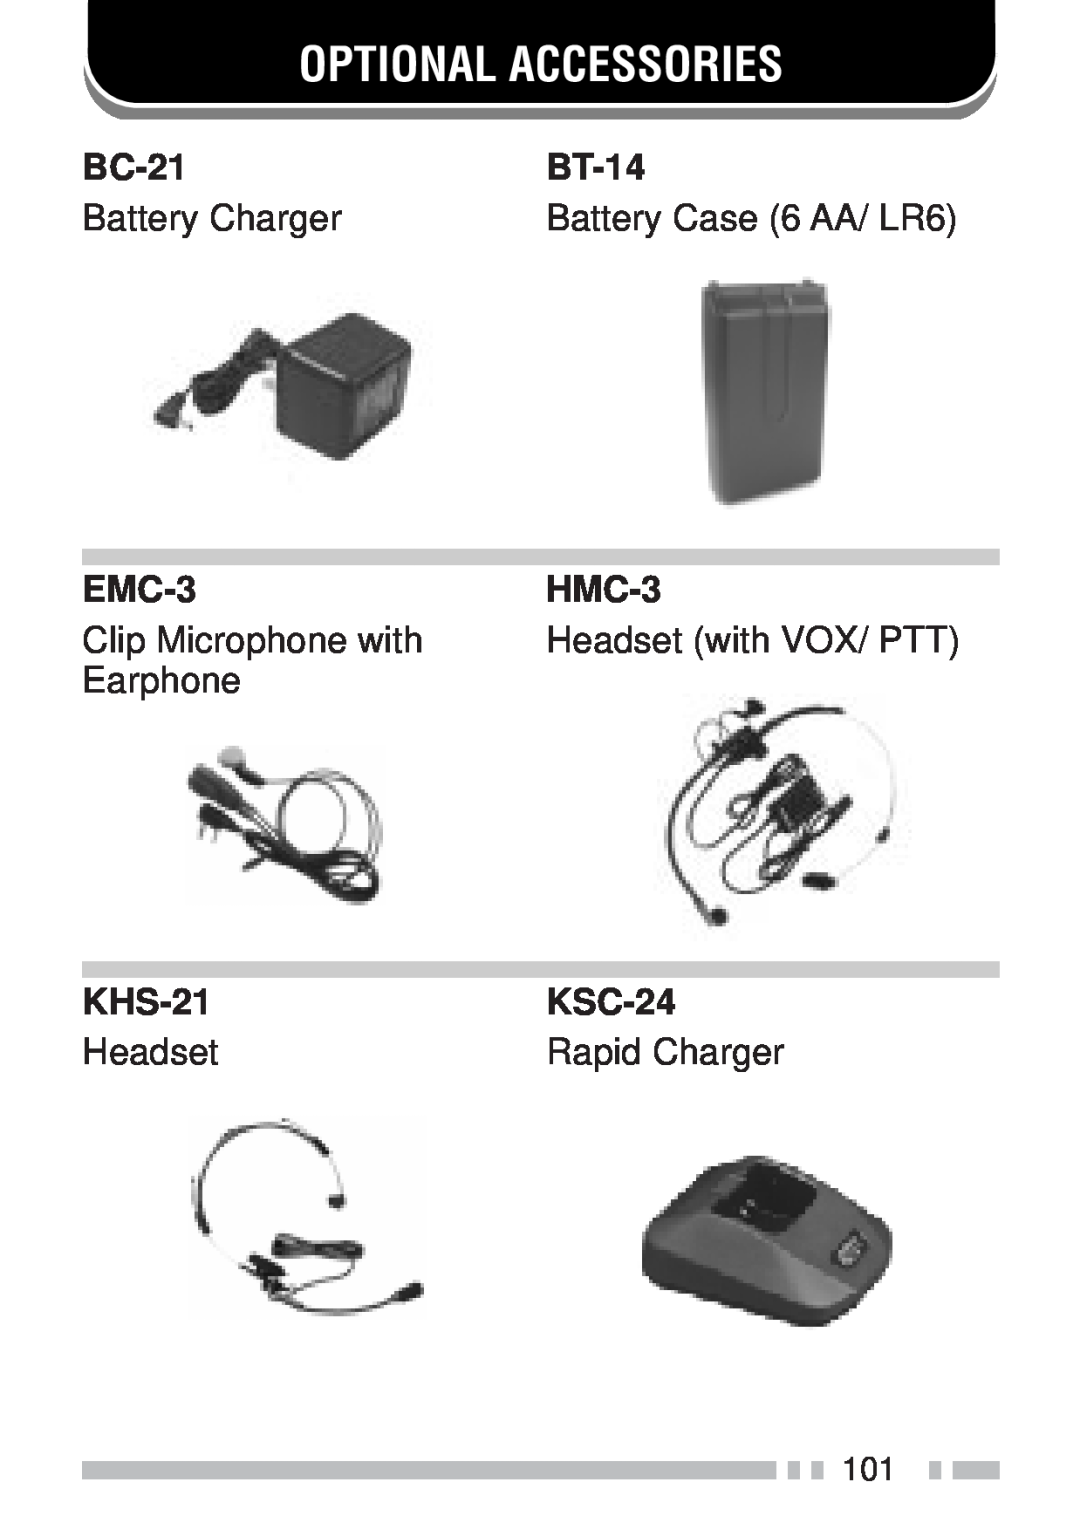 Kenwood TH-KAE Optional Accessories, BC-21, BT-14, Battery Charger, Battery Case 6 AA/ LR6, EMC-3, HMC-3, KHS-21, KSC-24 